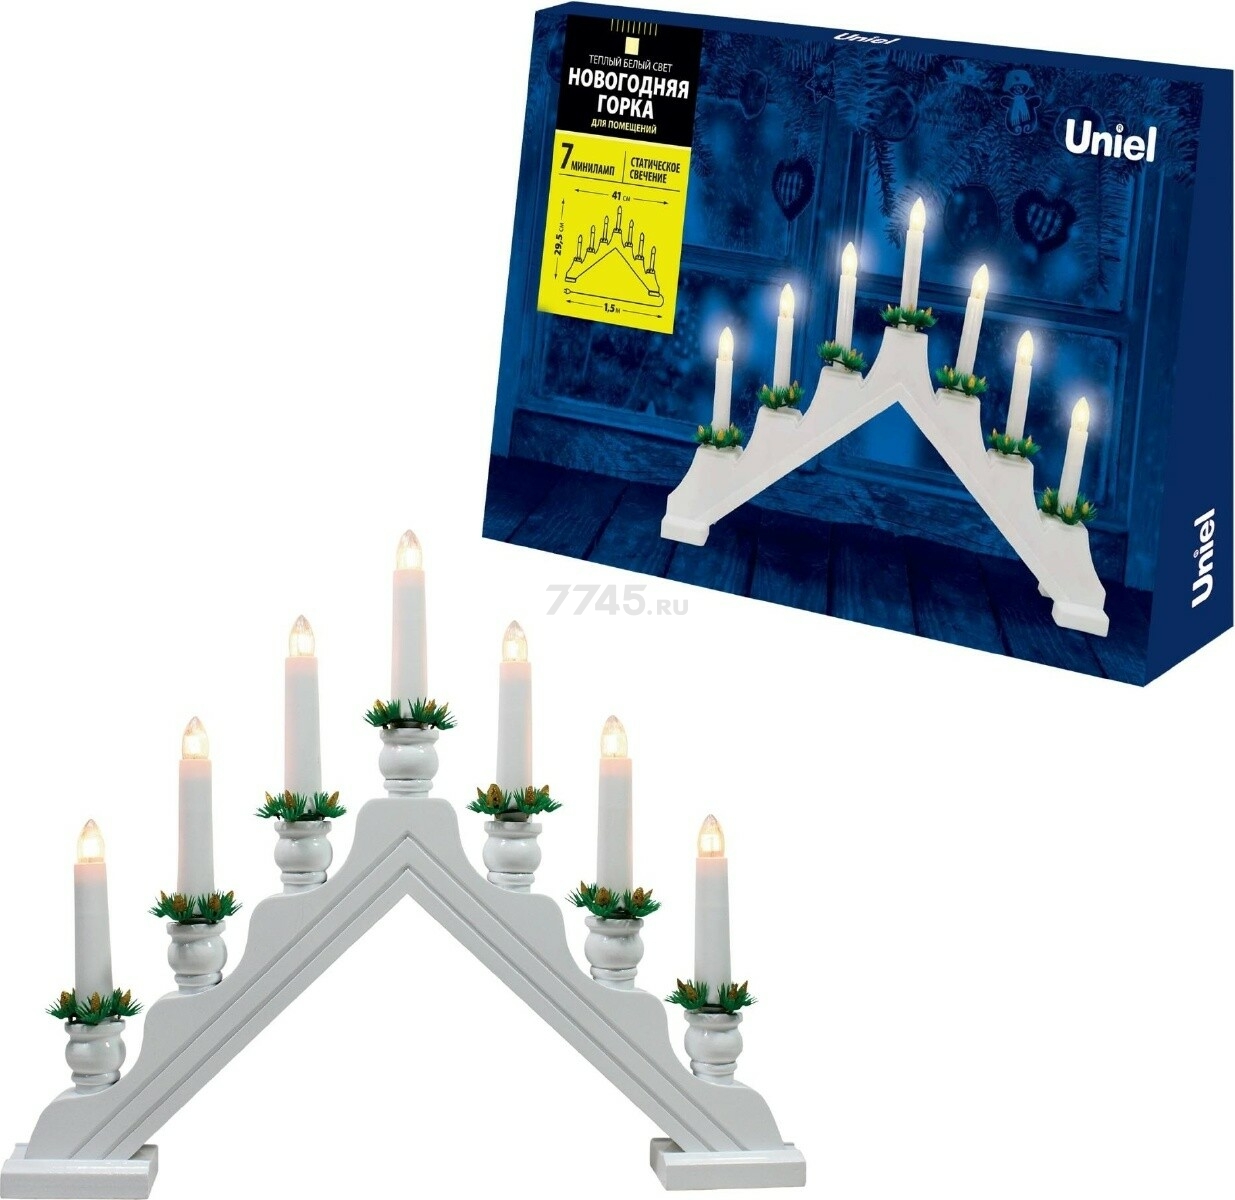 Фигура с подсветкой UNIEL UDL-L7301-007/SWA/WW WHITE BRIDGE Новогодняя горка 7 свечек - Фото 5